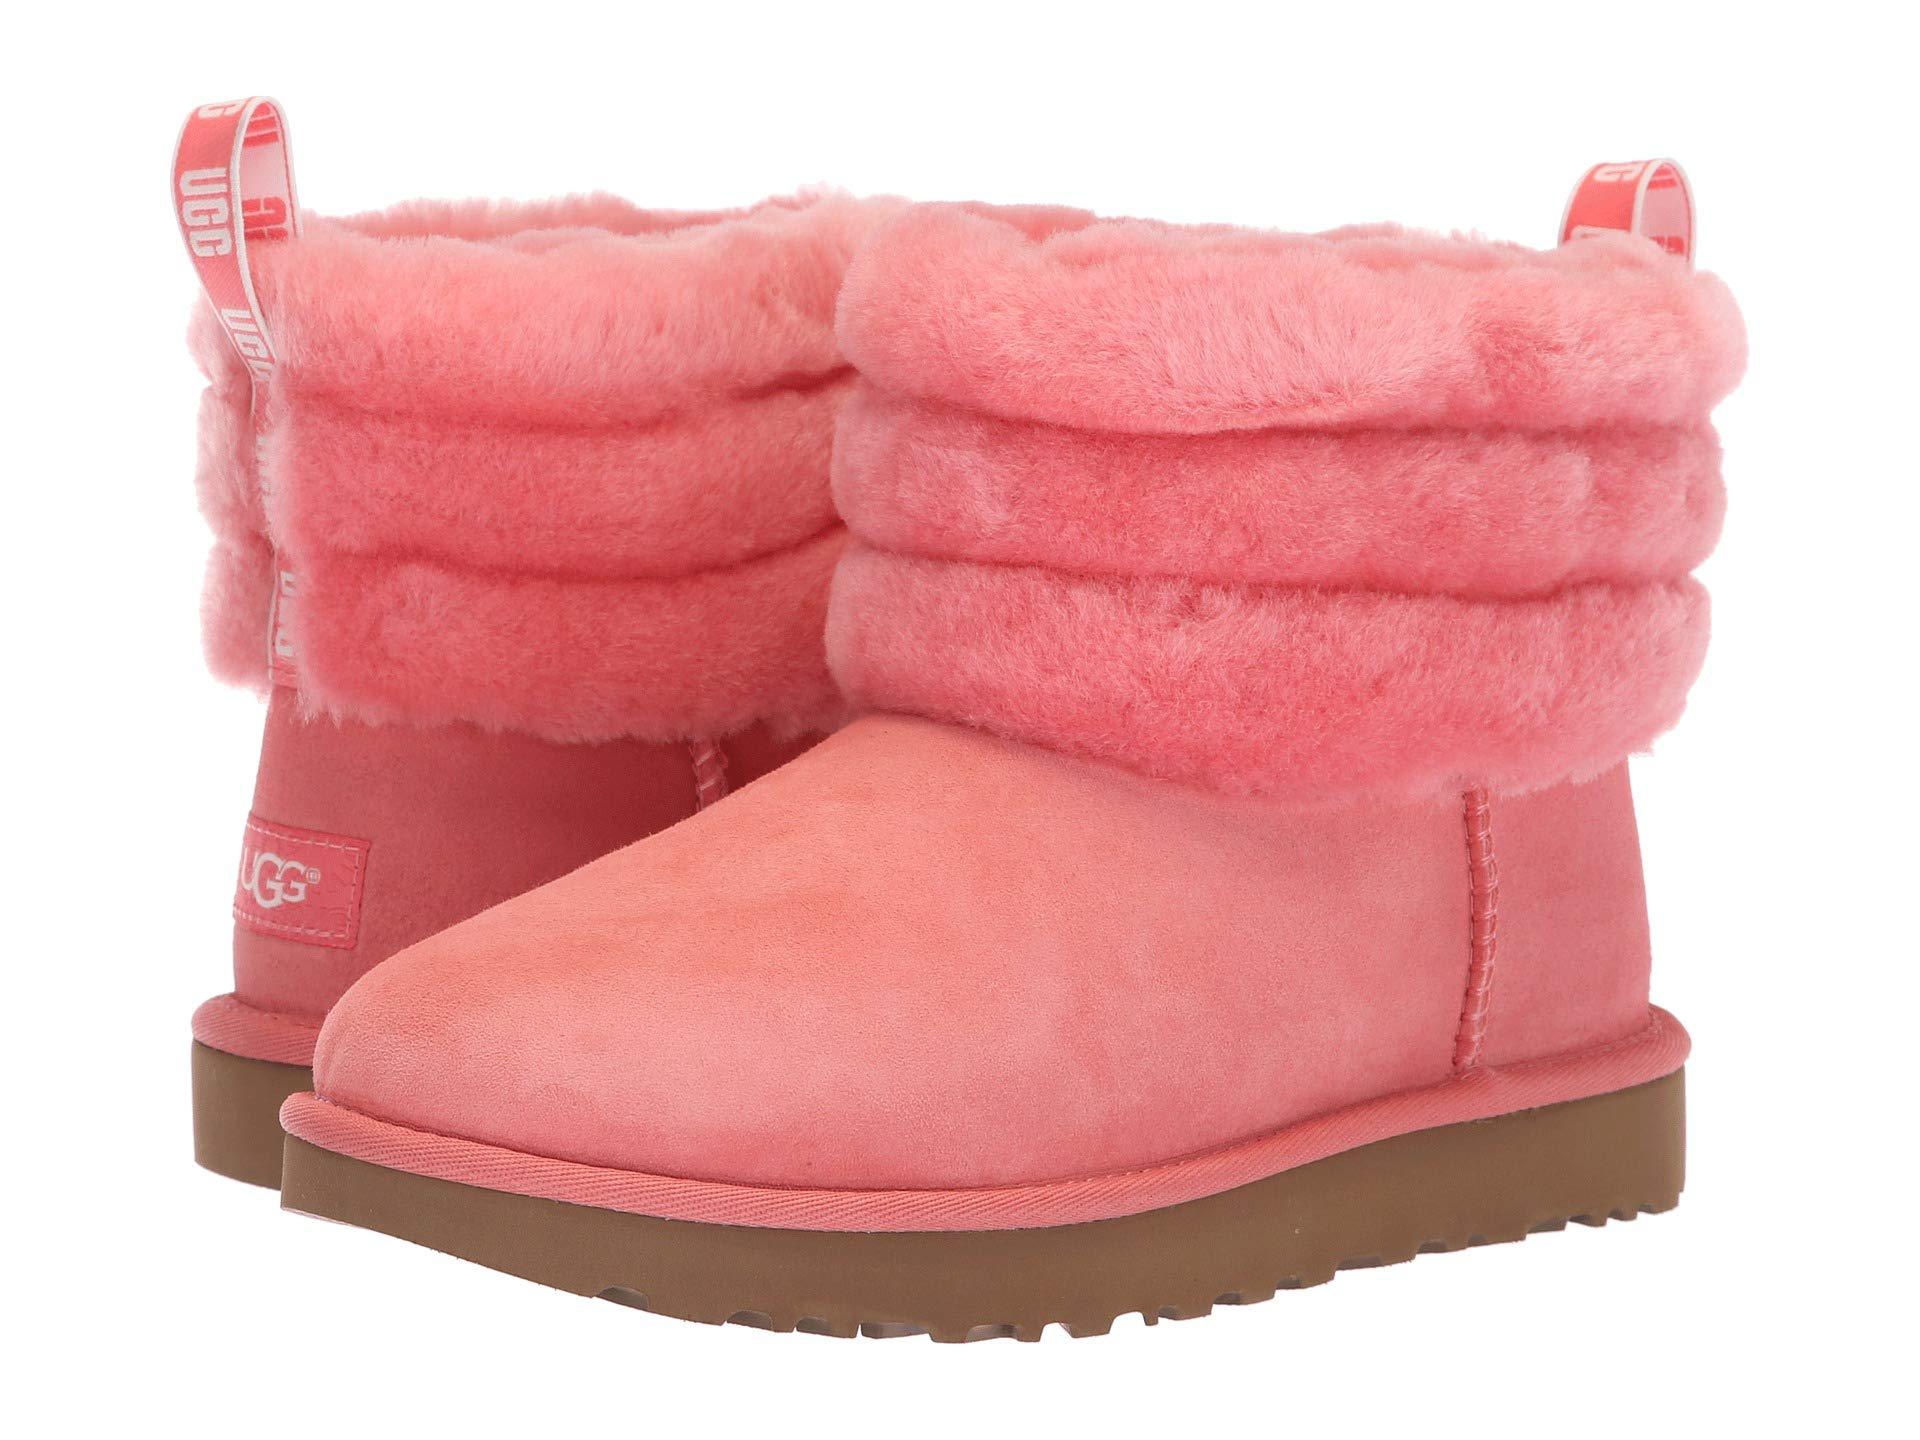 pink ugg like boots